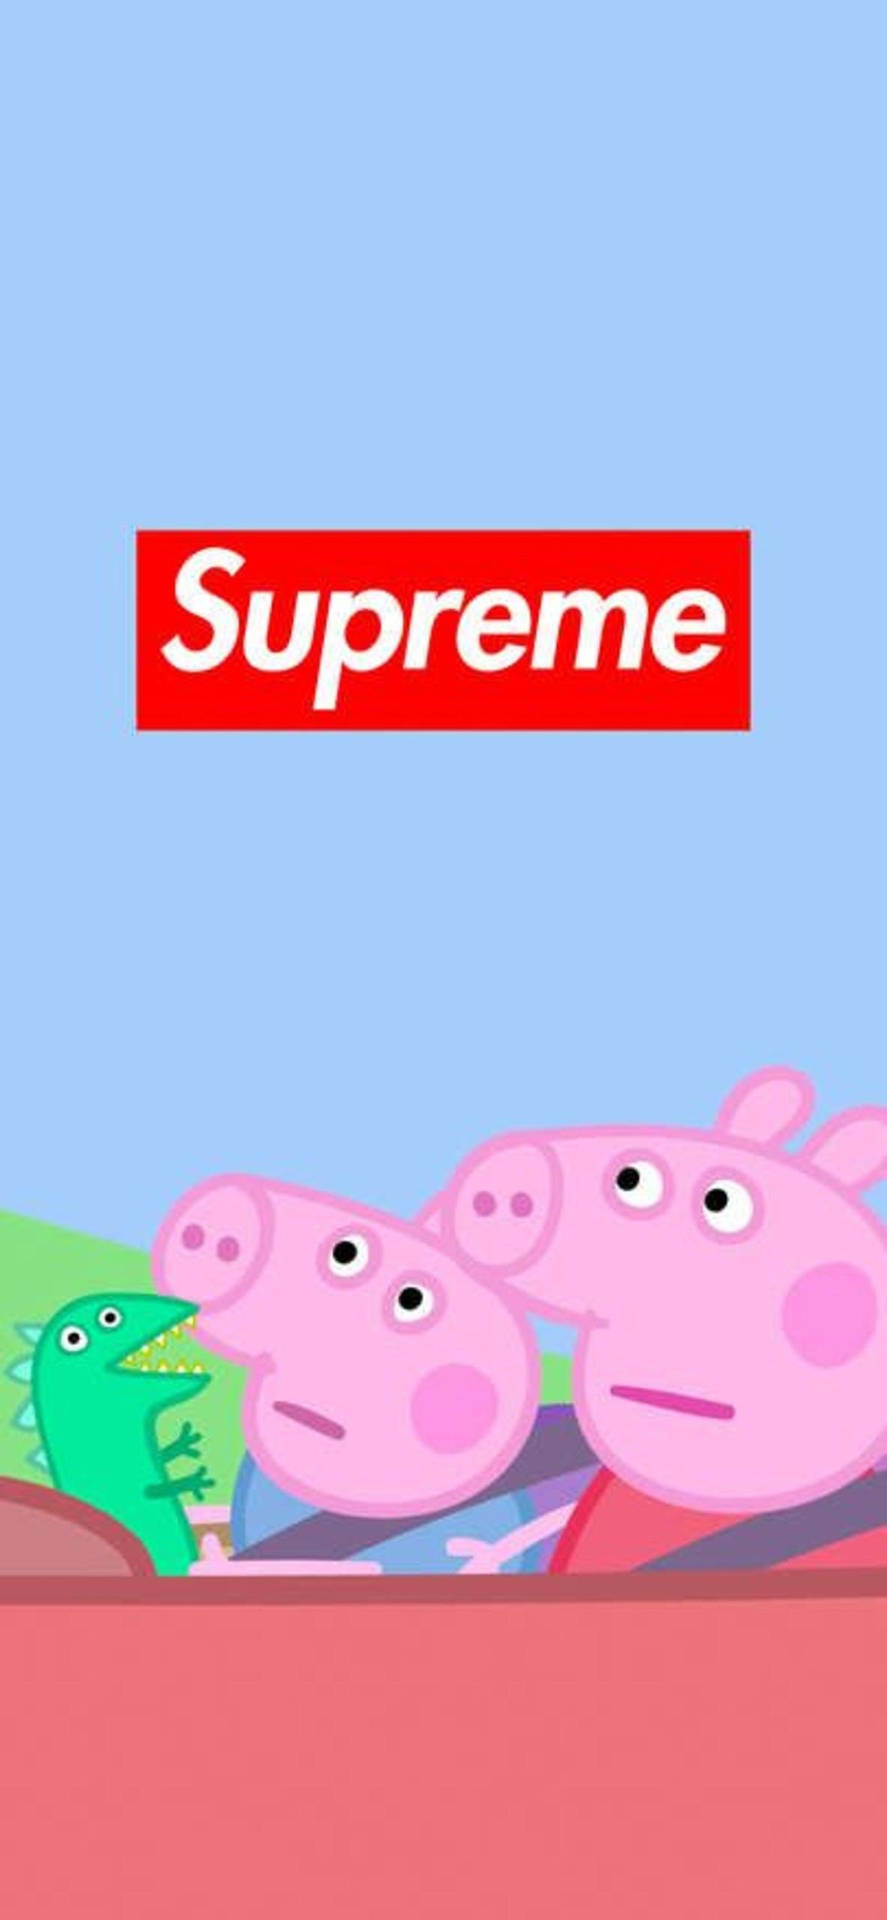 Suprema Meme Di Peppa Pig Sfondo